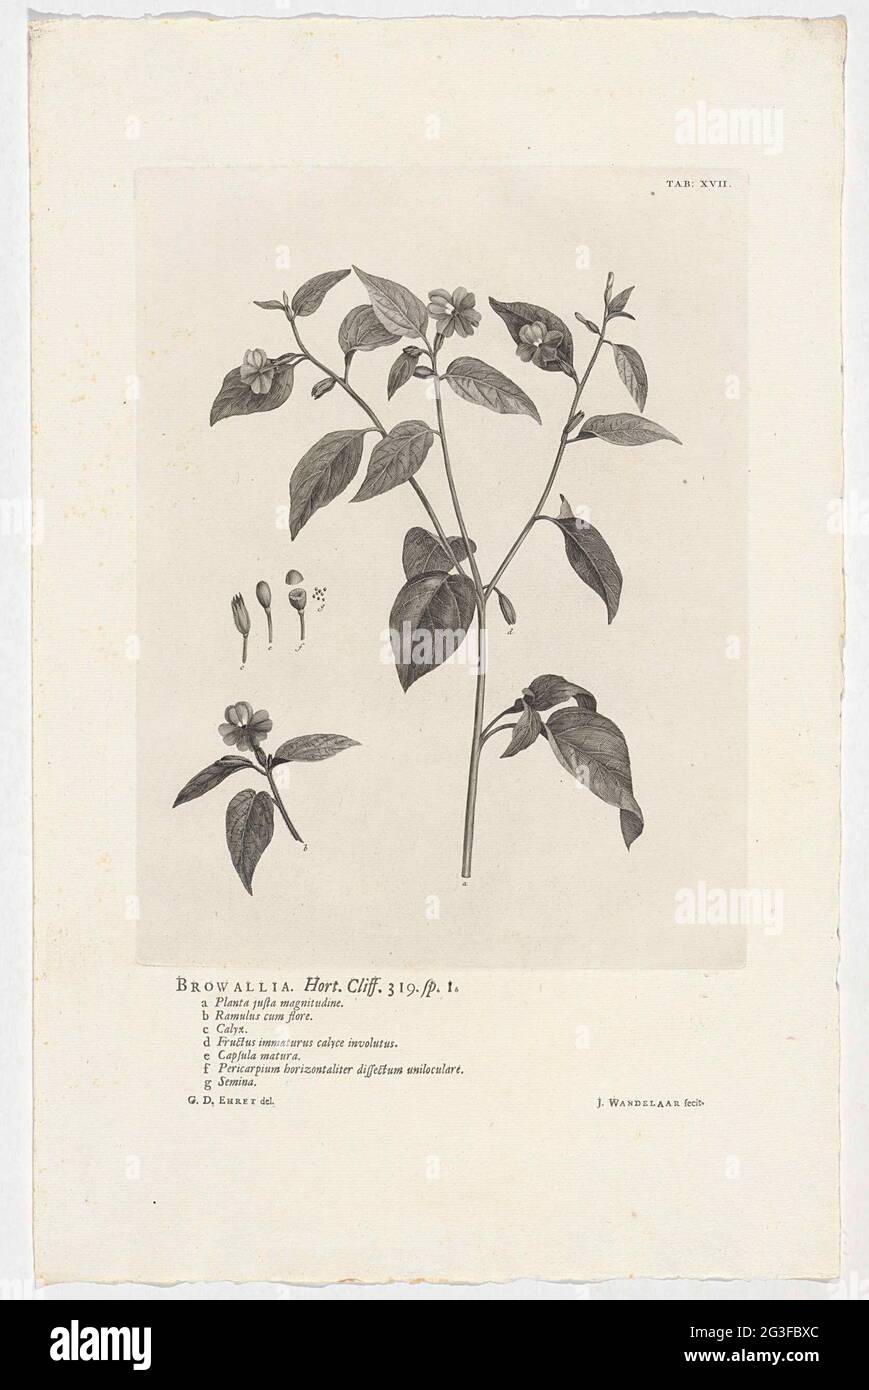 Browallia americana; Browallia. Hort. Cliff. 319. Sp. 1. At the top right labeled: Tab: XVII. Stock Photo